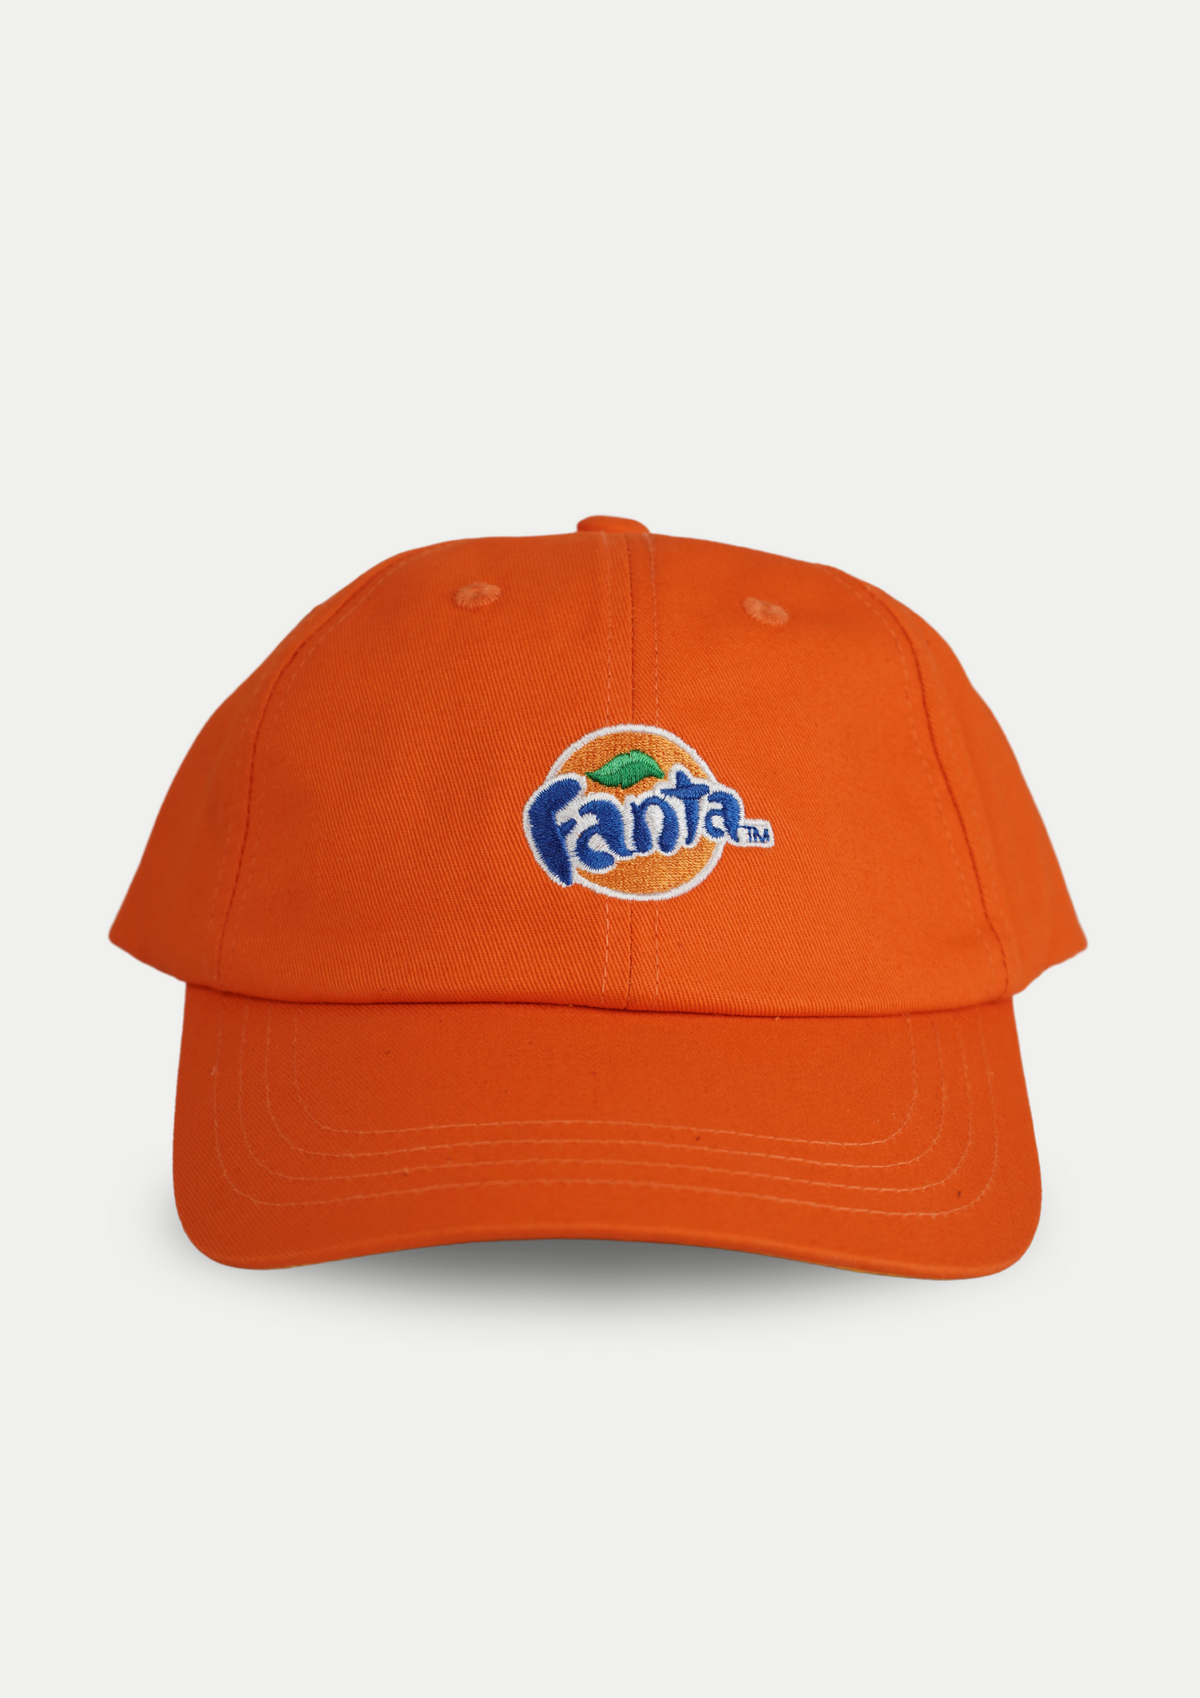 Mossimo Apricot Orange Fanta Baseball Cap